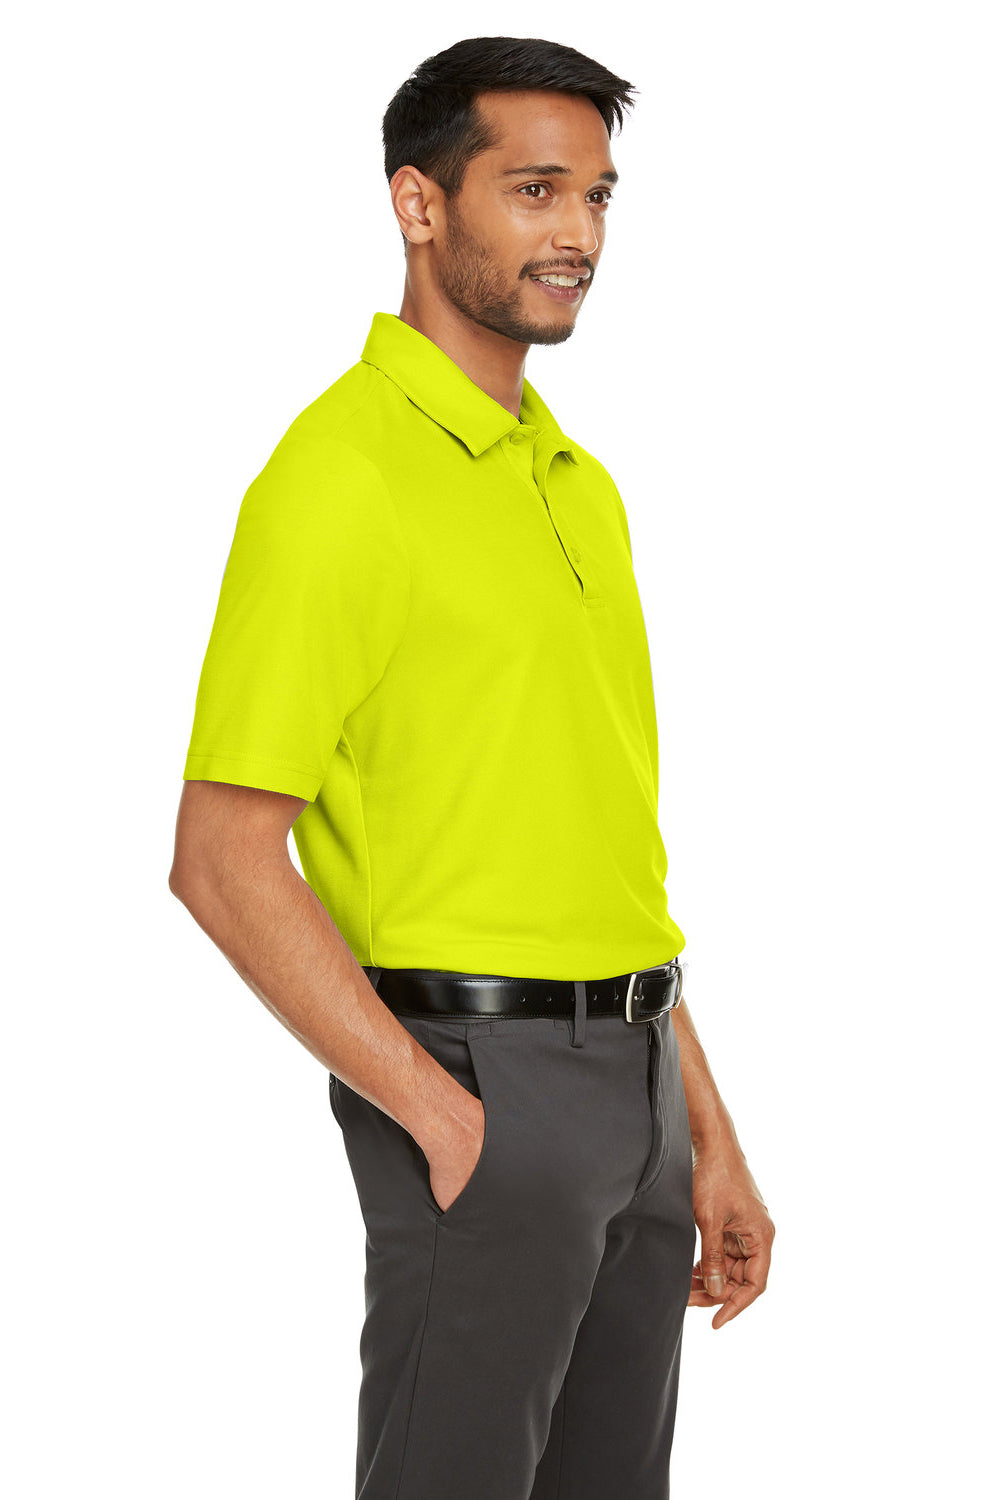 Core 365 CE112 Mens Fusion ChromaSoft Performance Moisture Wicking Short Sleeve Polo Shirt Safety Yellow 3Q